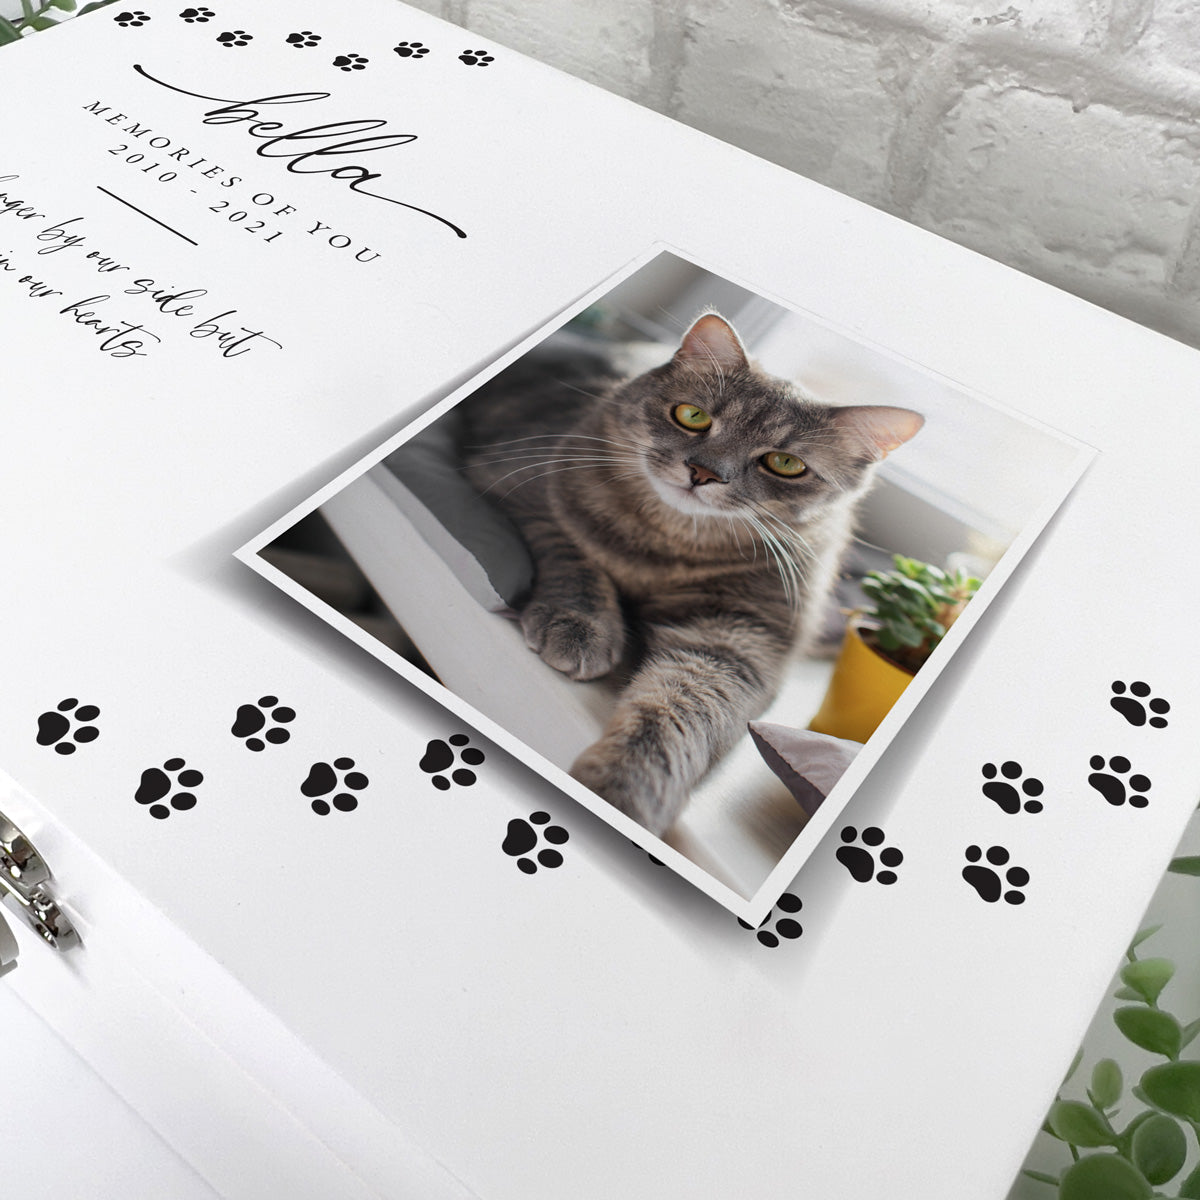 Personalised Paw Prints Luxury Pet Memorial White Wooden Photo Memory Box - 3 Sizes